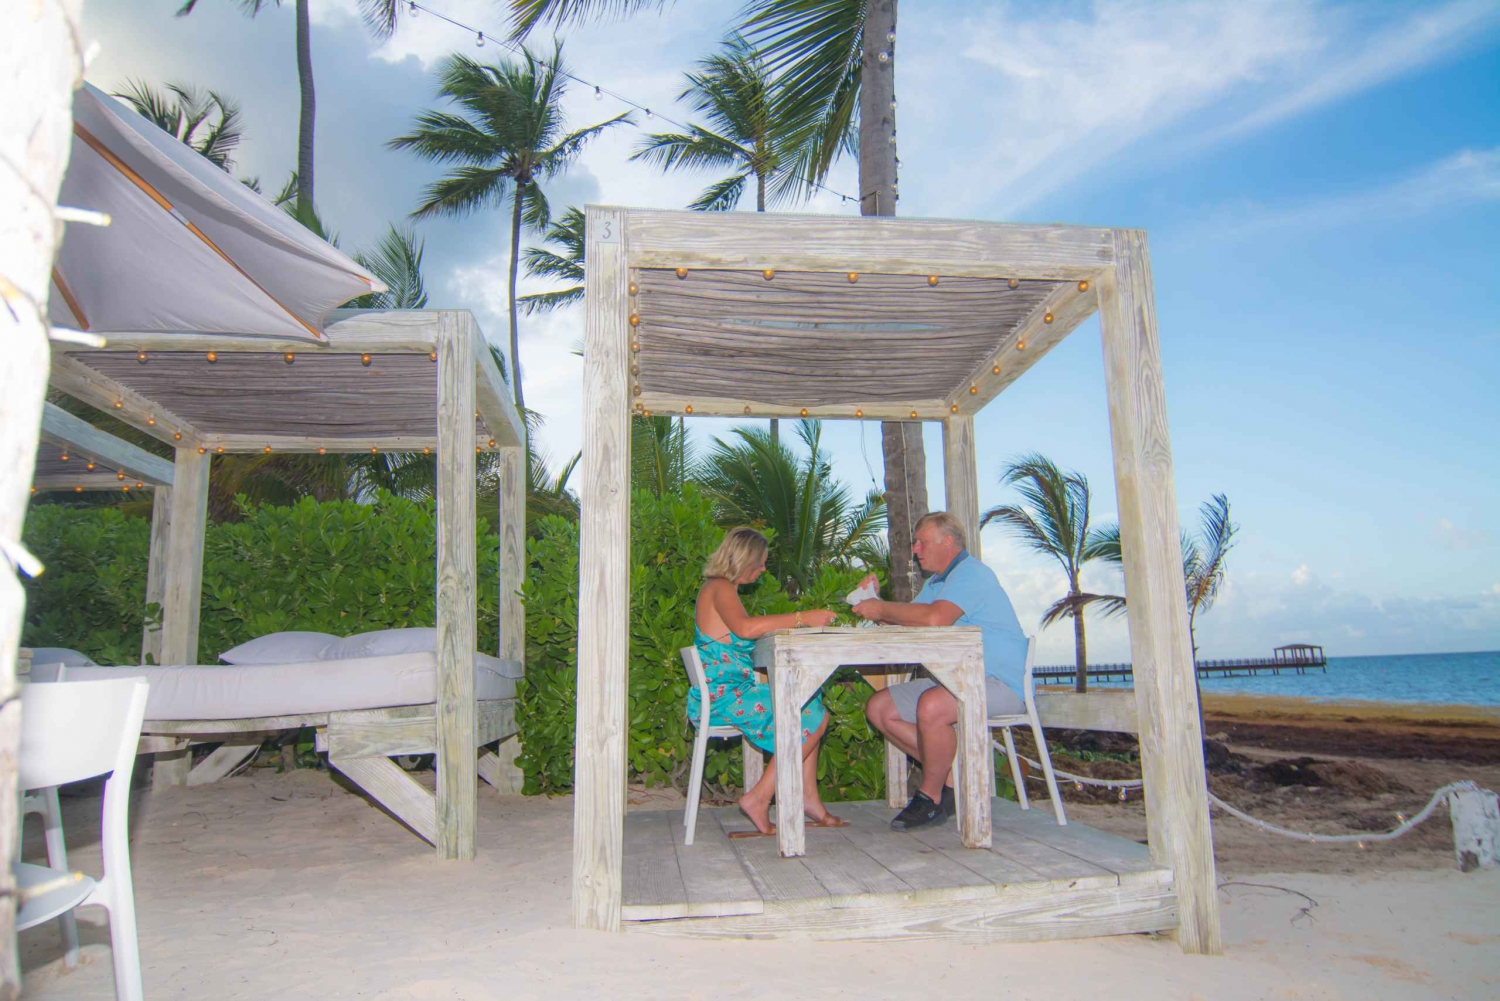 Punta Cana: Restaurant and Beach Club Tour with Transfer